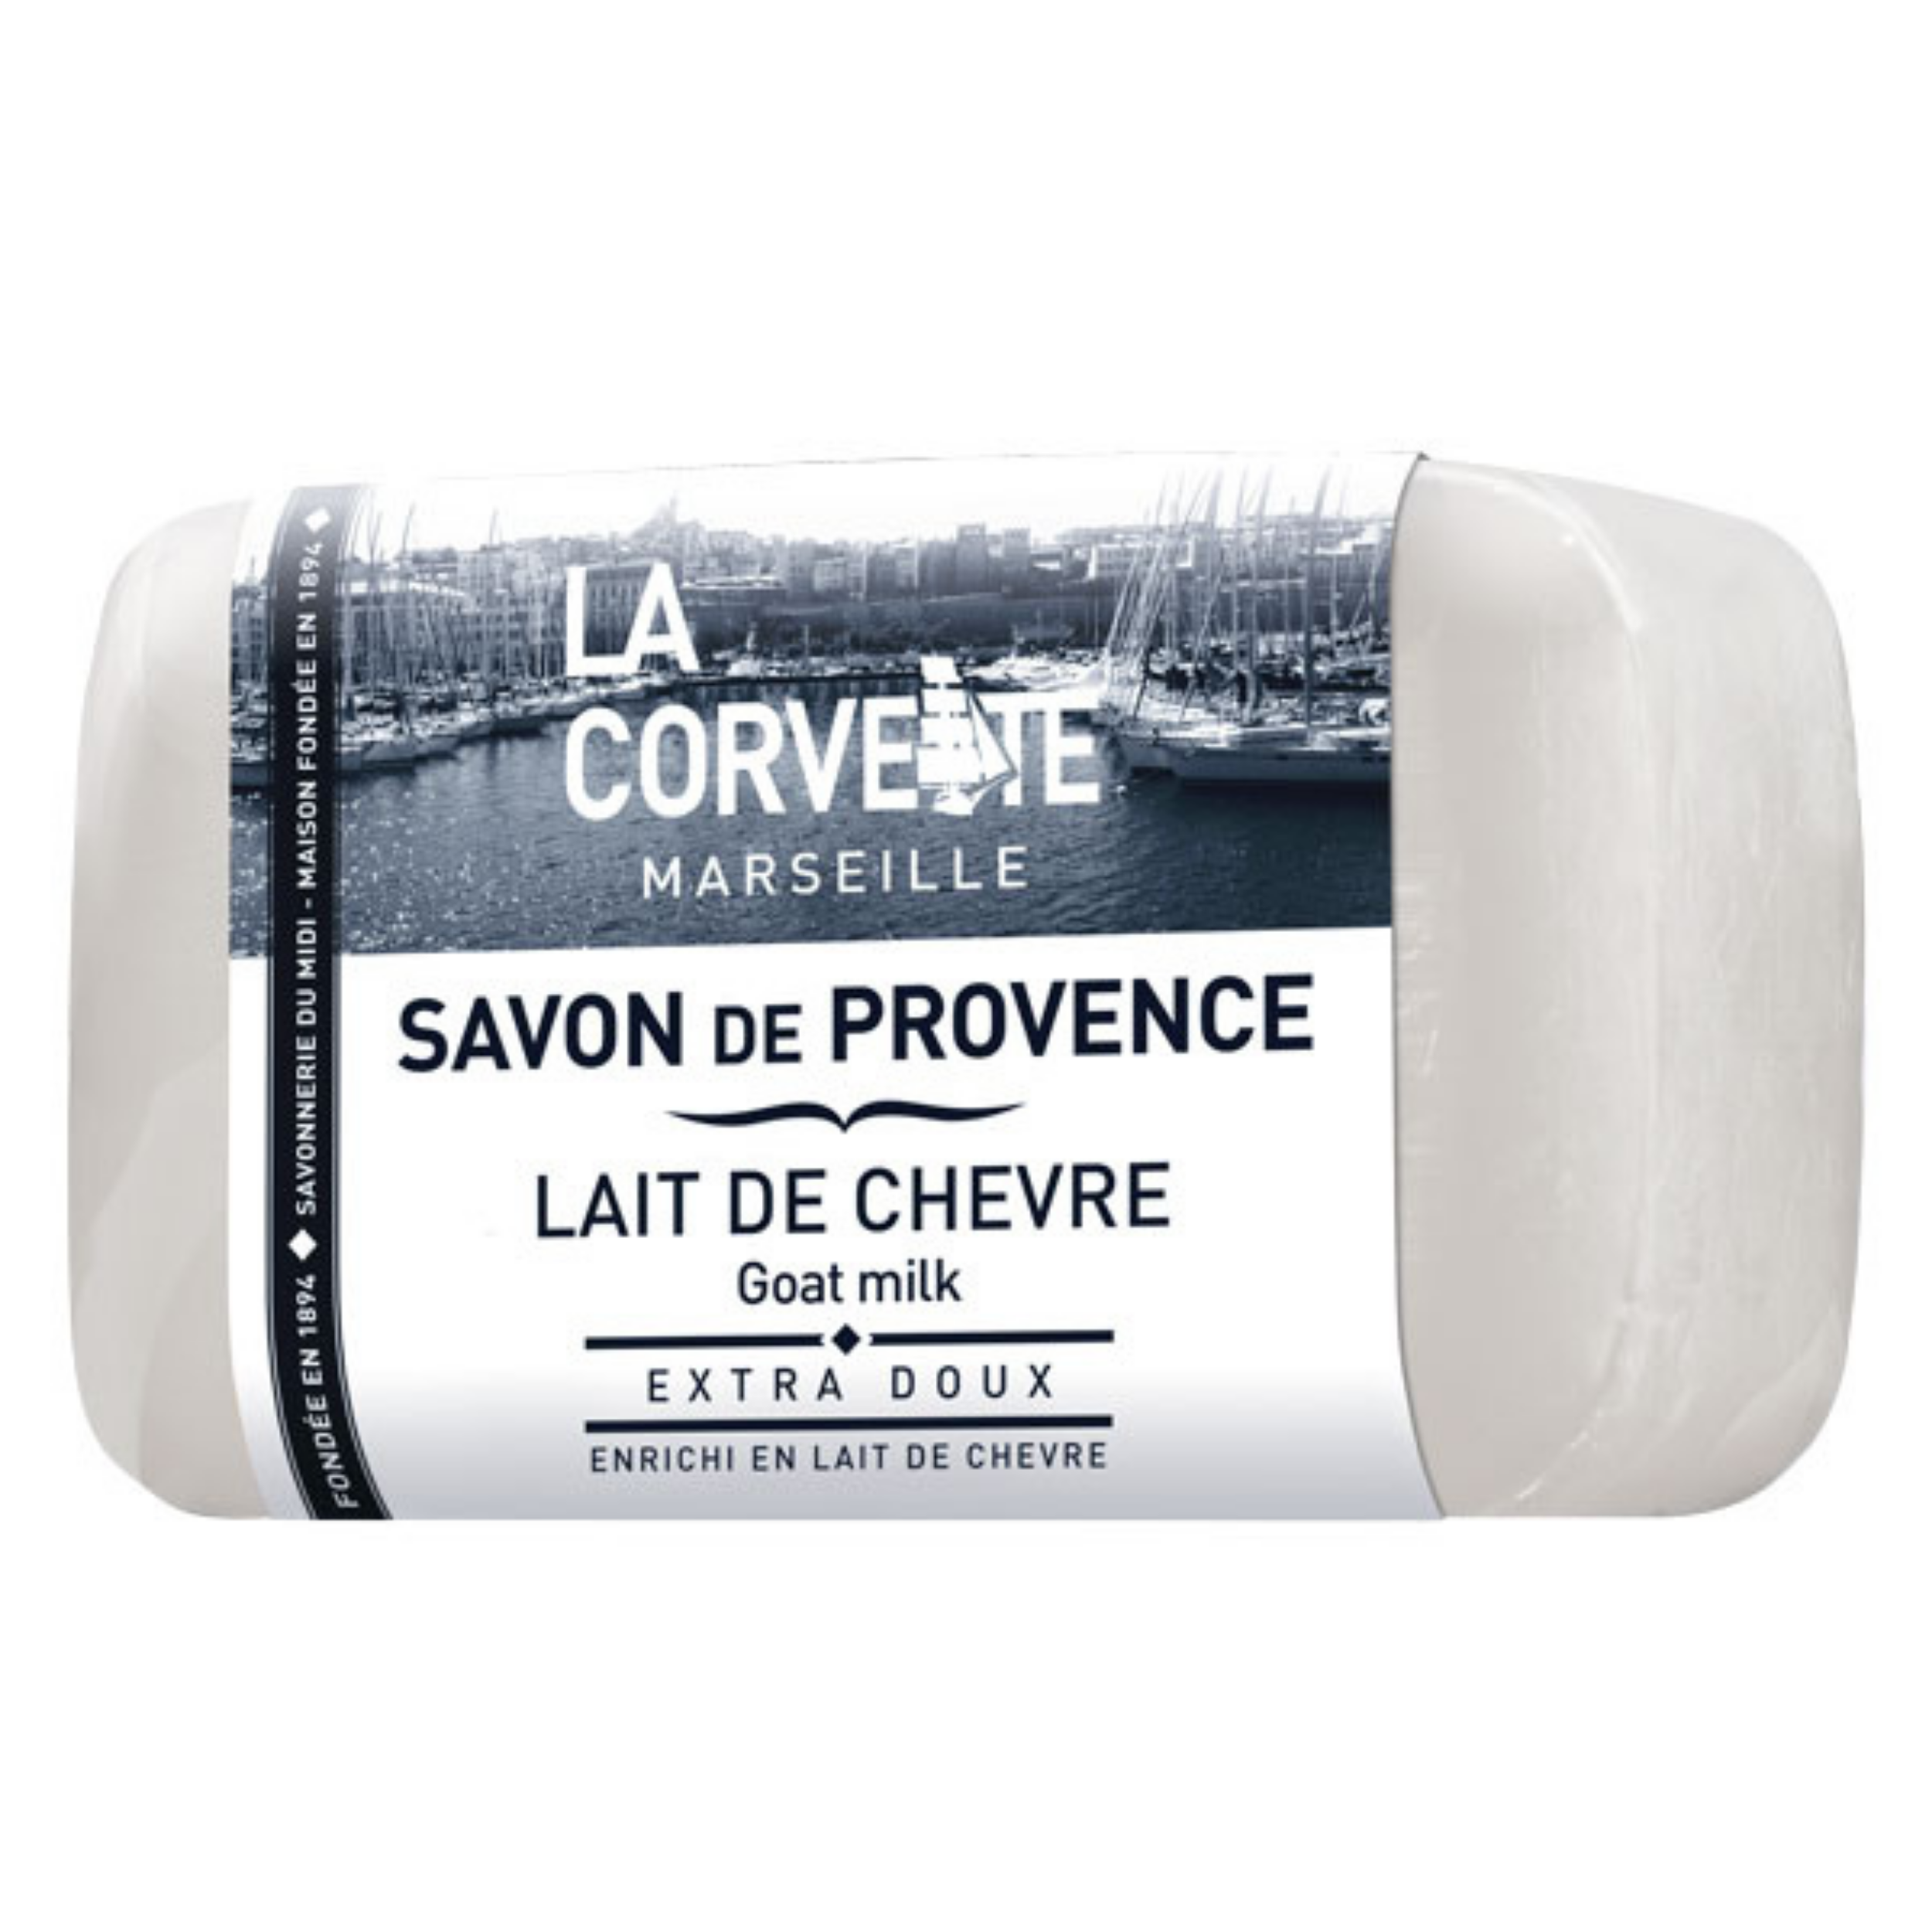 La Corvette Marseille Provence Soap  with Goat's Milk 200g